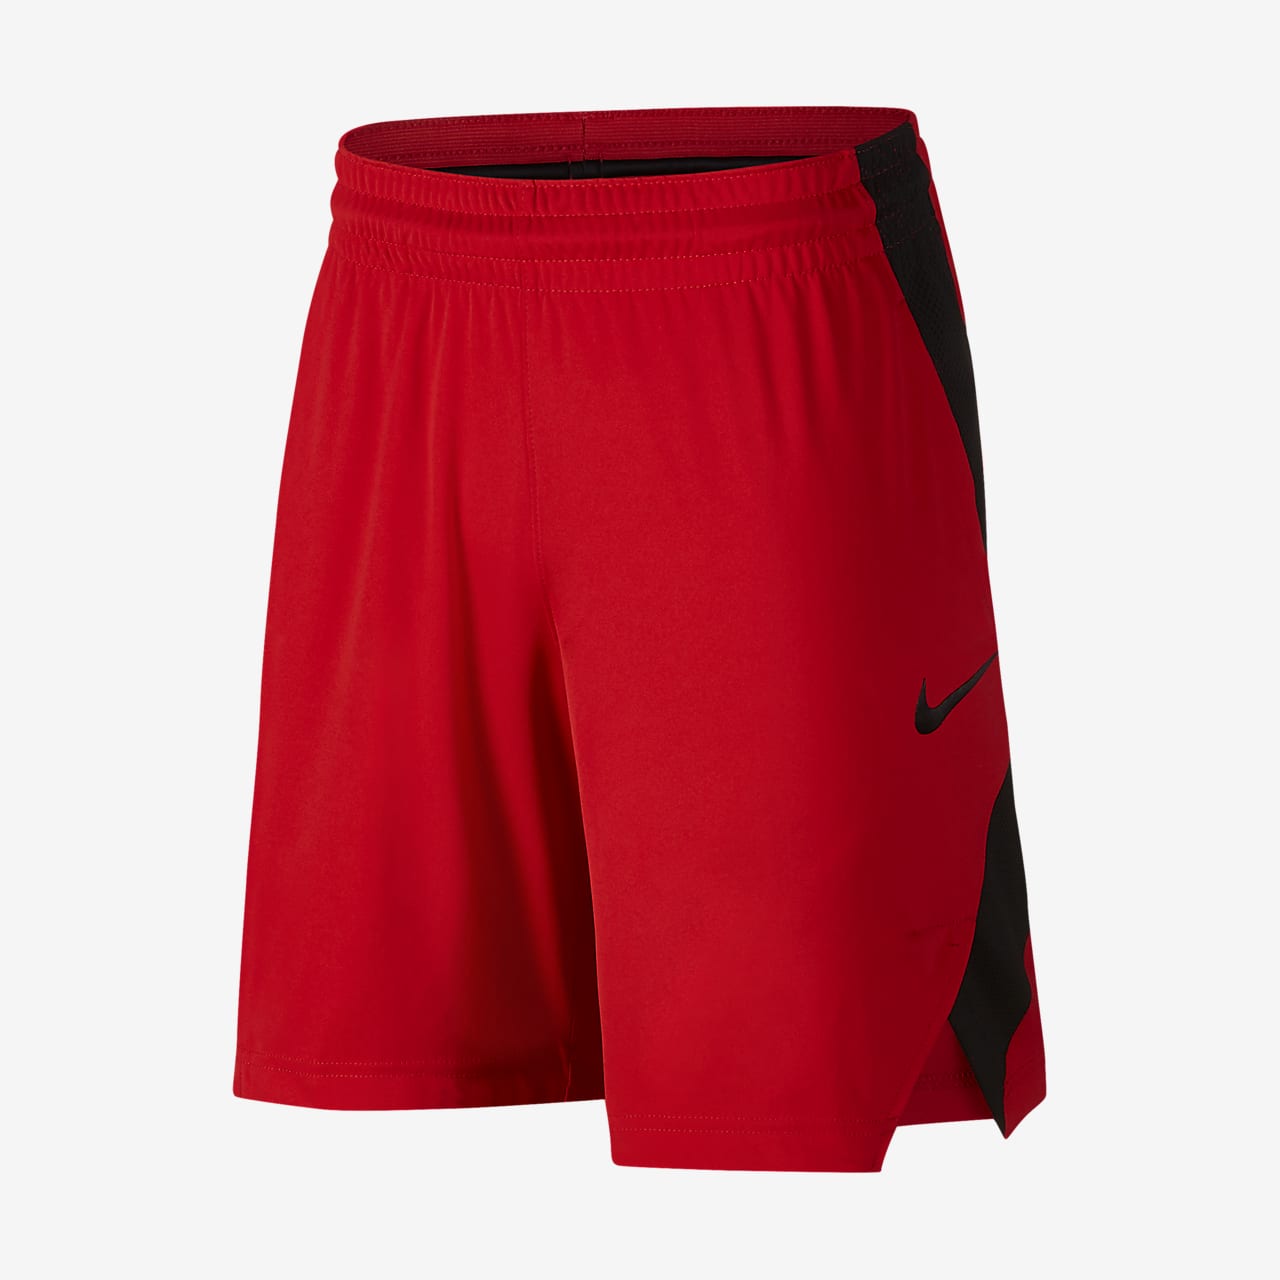 dry elite basketball shorts